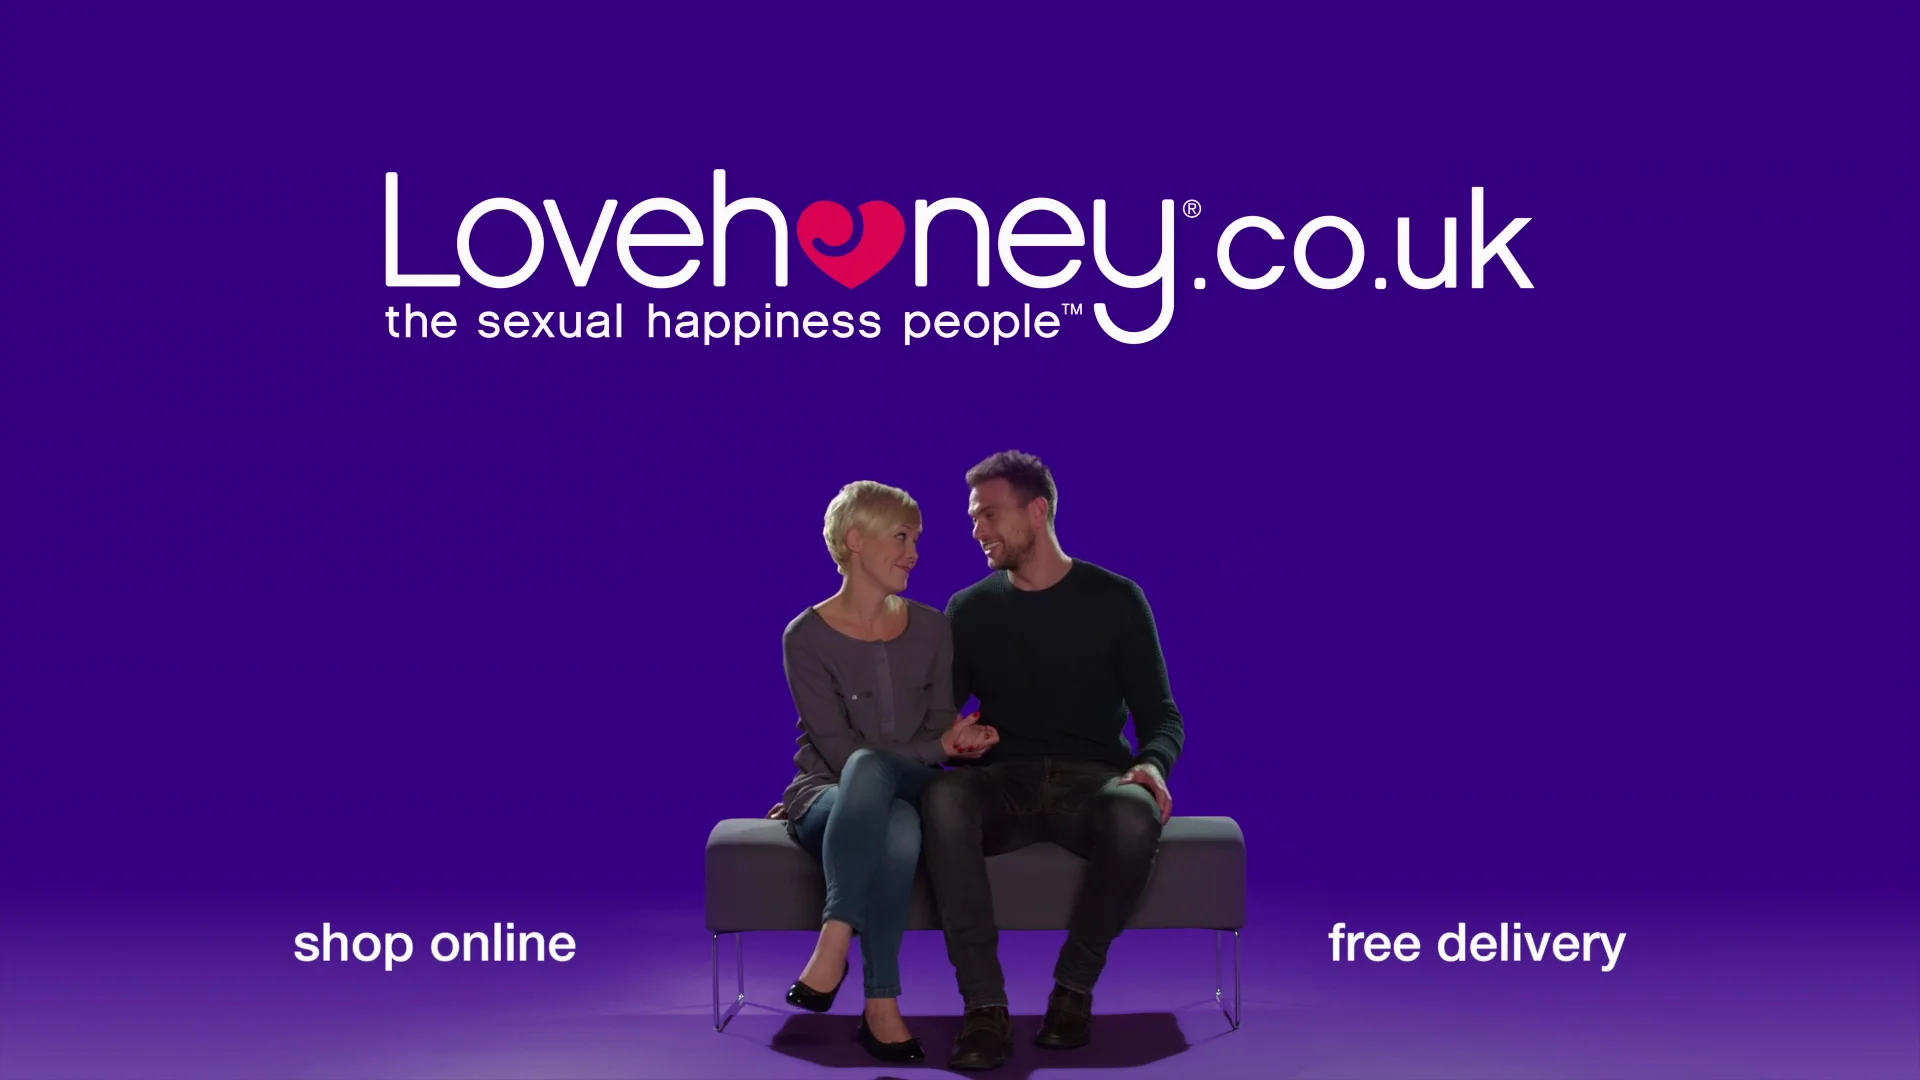 Lovehoney.co.uk TV advert - Post 11pm version on Vimeo